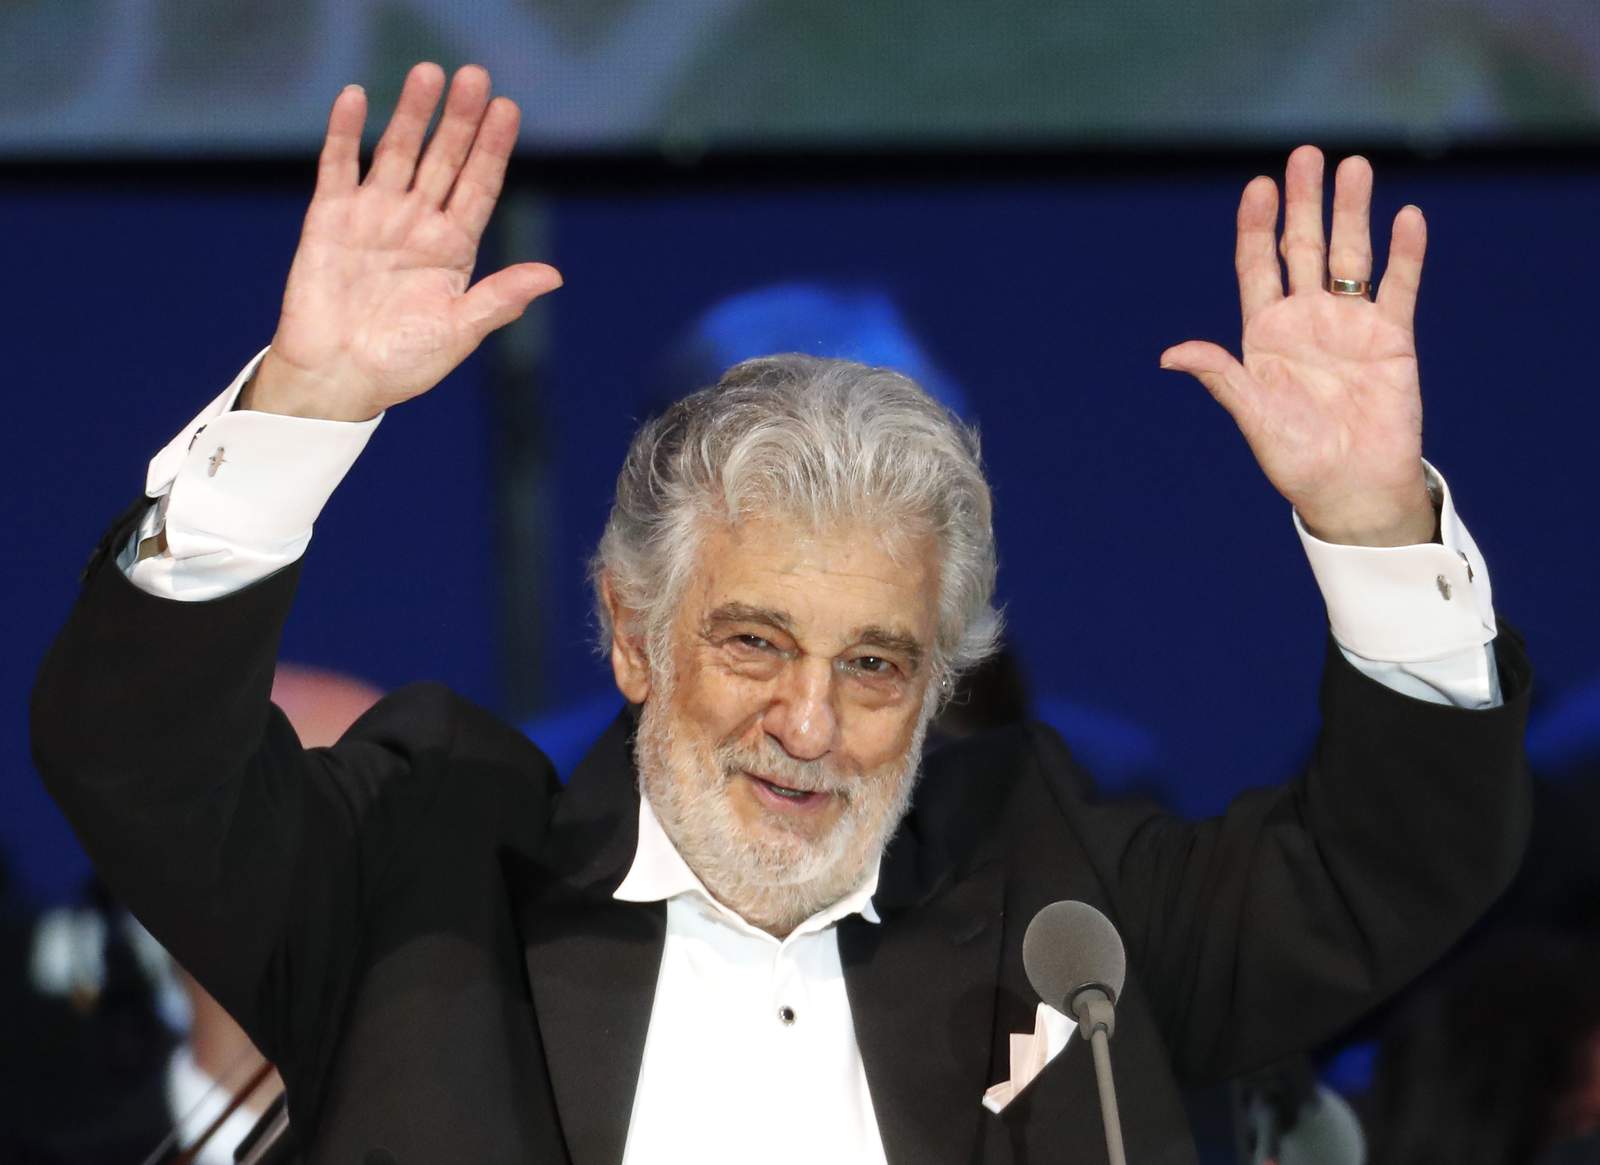 Placido Domingo to receive lifetime award in Austria